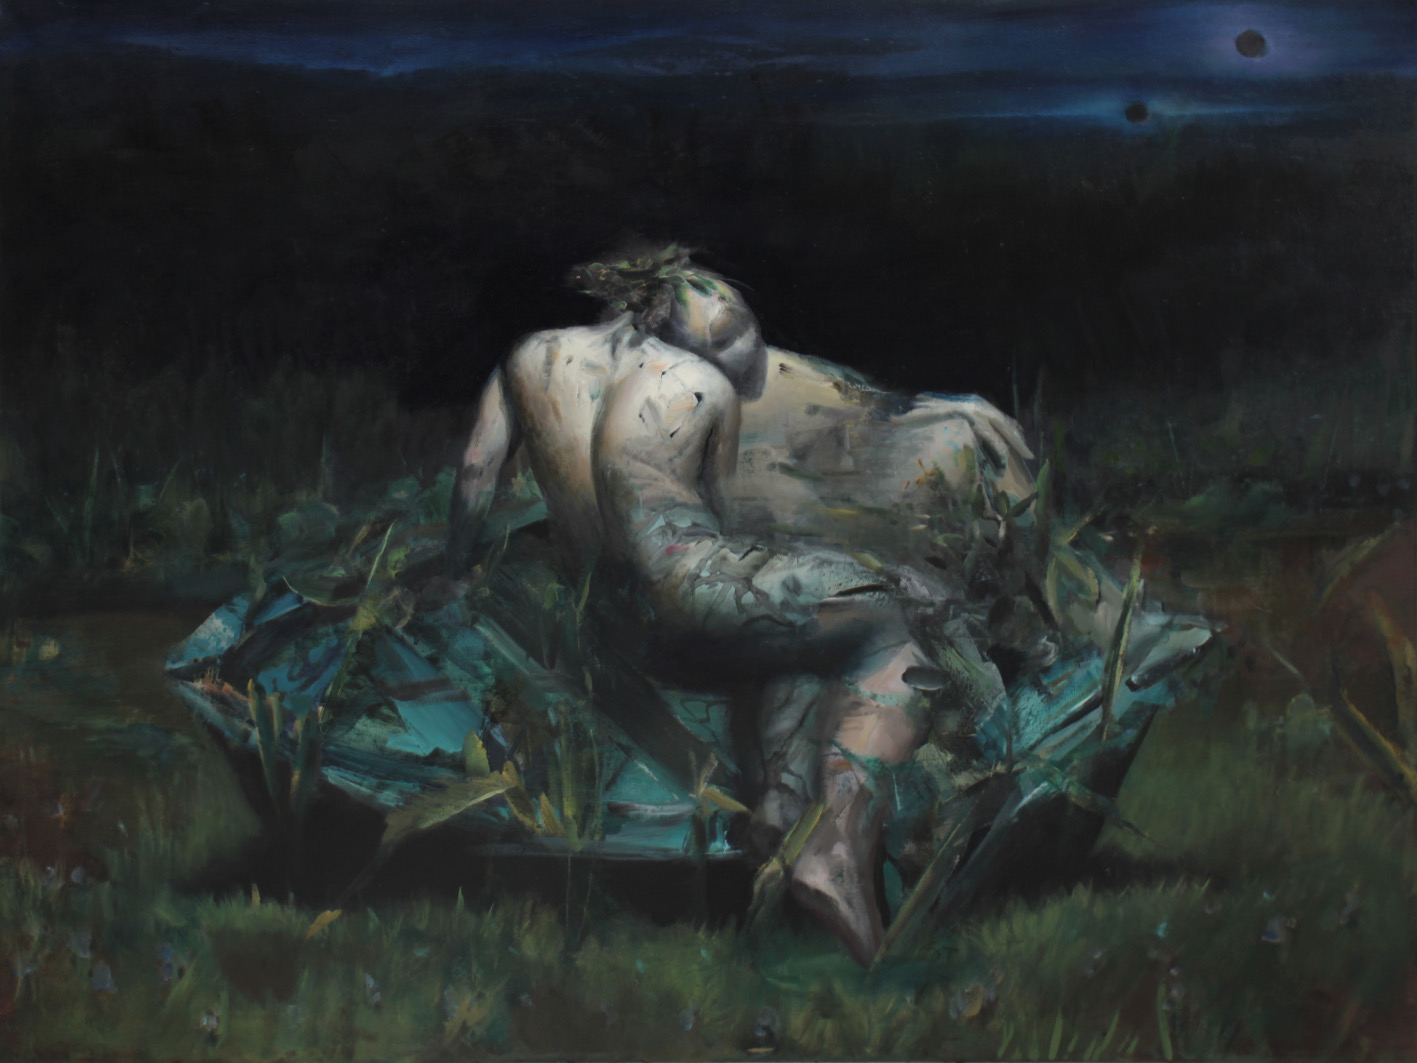 Gogo Ieromonachou, Nocturne, oil on canvas, 90 x 120 cm, 2021